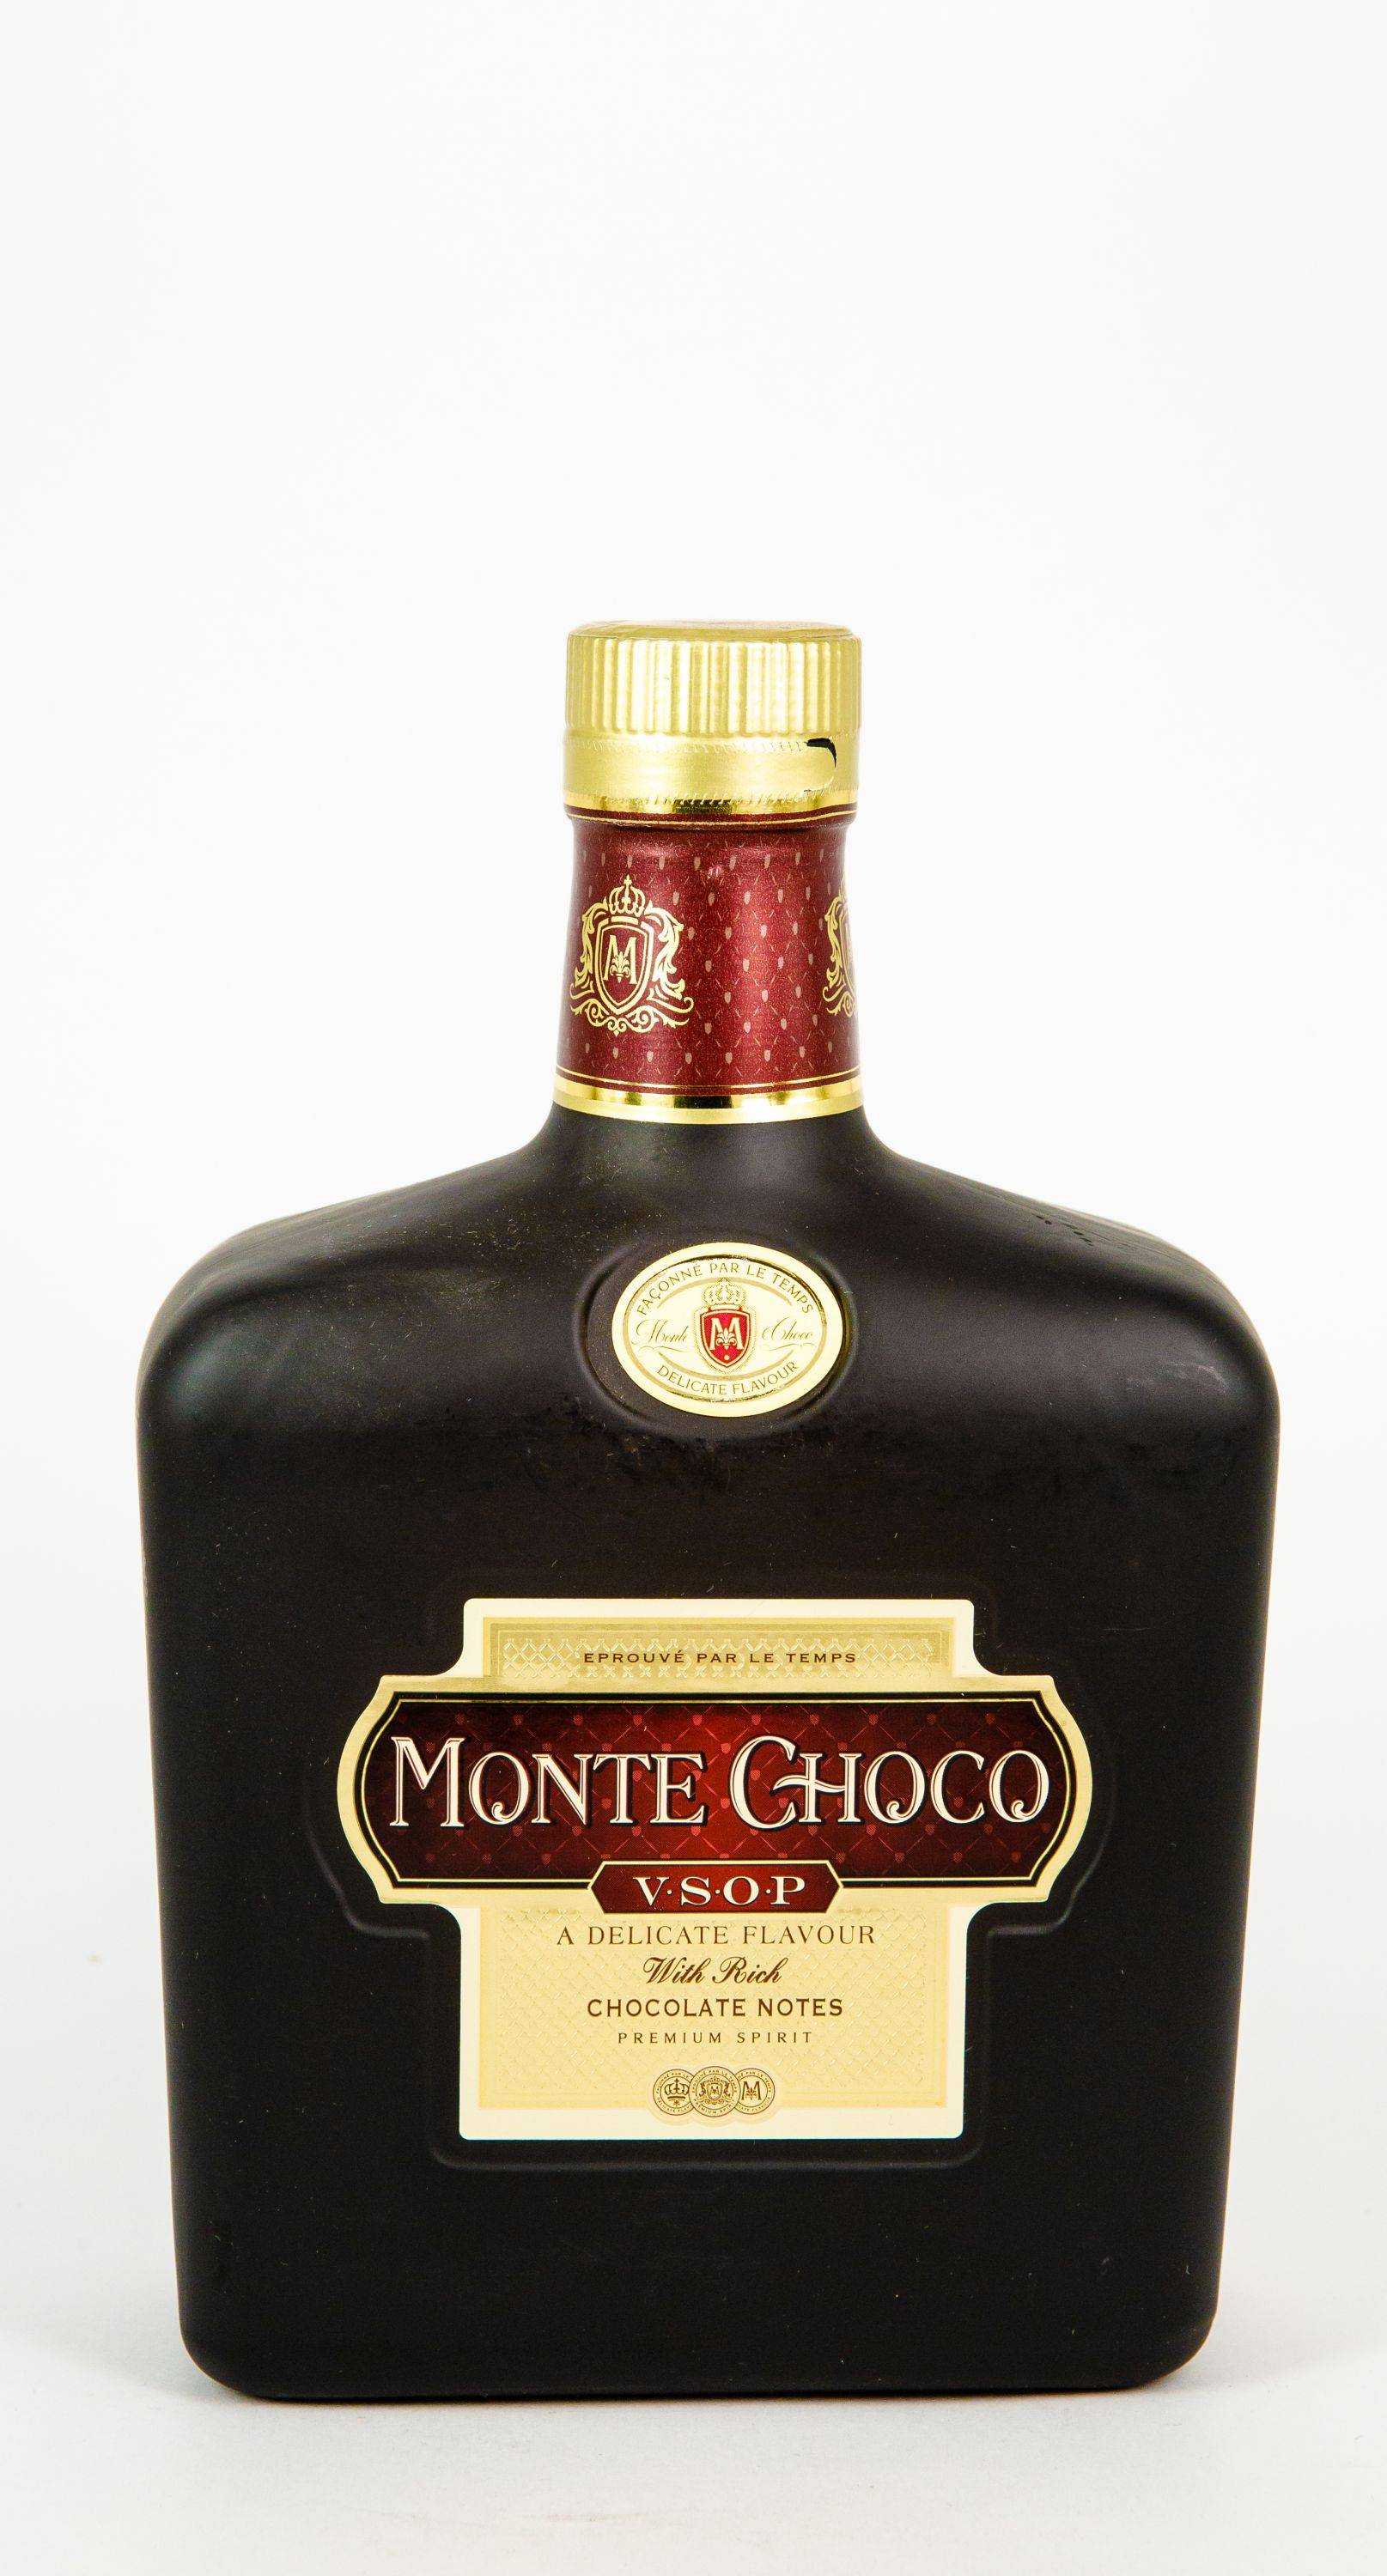 Коньяк шоко. Монте Чоко коньяк шоколадный. Коньячный напиток Монте шоко. Монте Чоко коньяк КБ. Chocolatier коньяк Monte Choco.